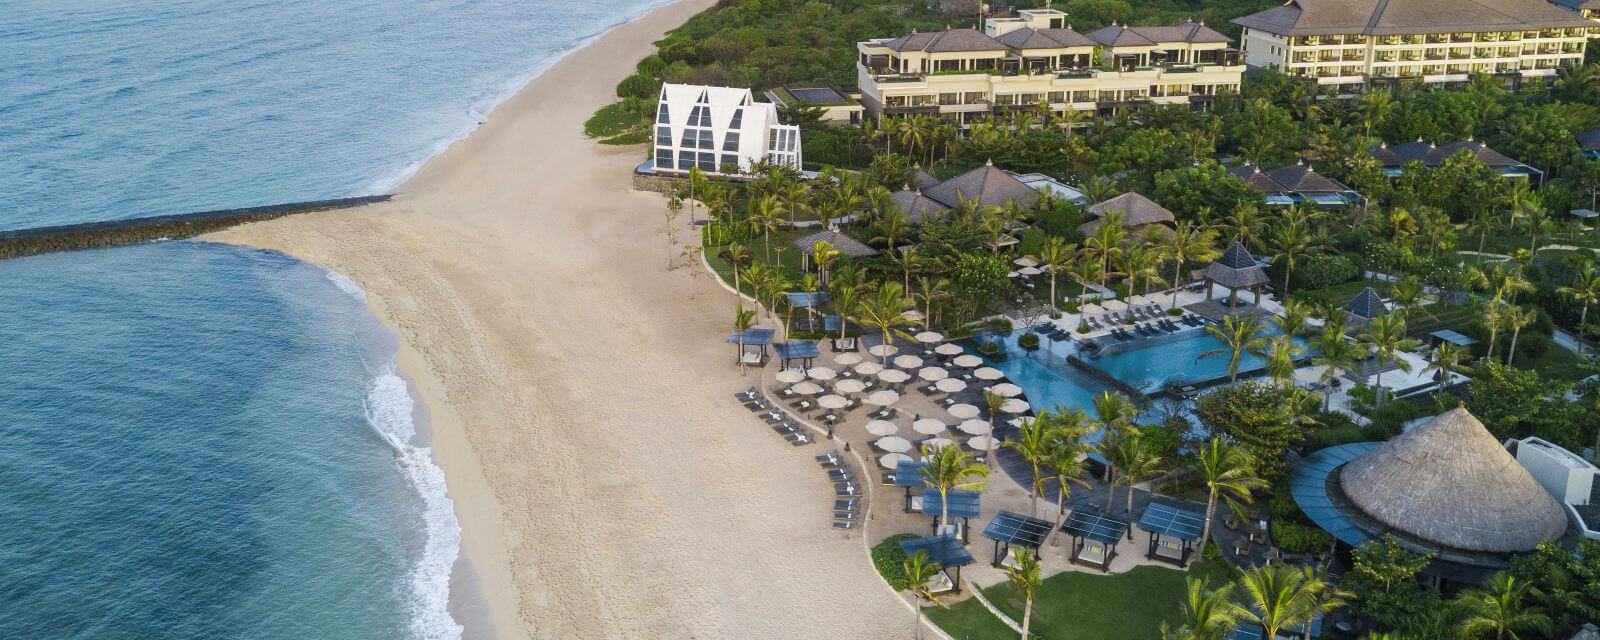 The Ritz Carlton Bali Resort Overview Slider 1